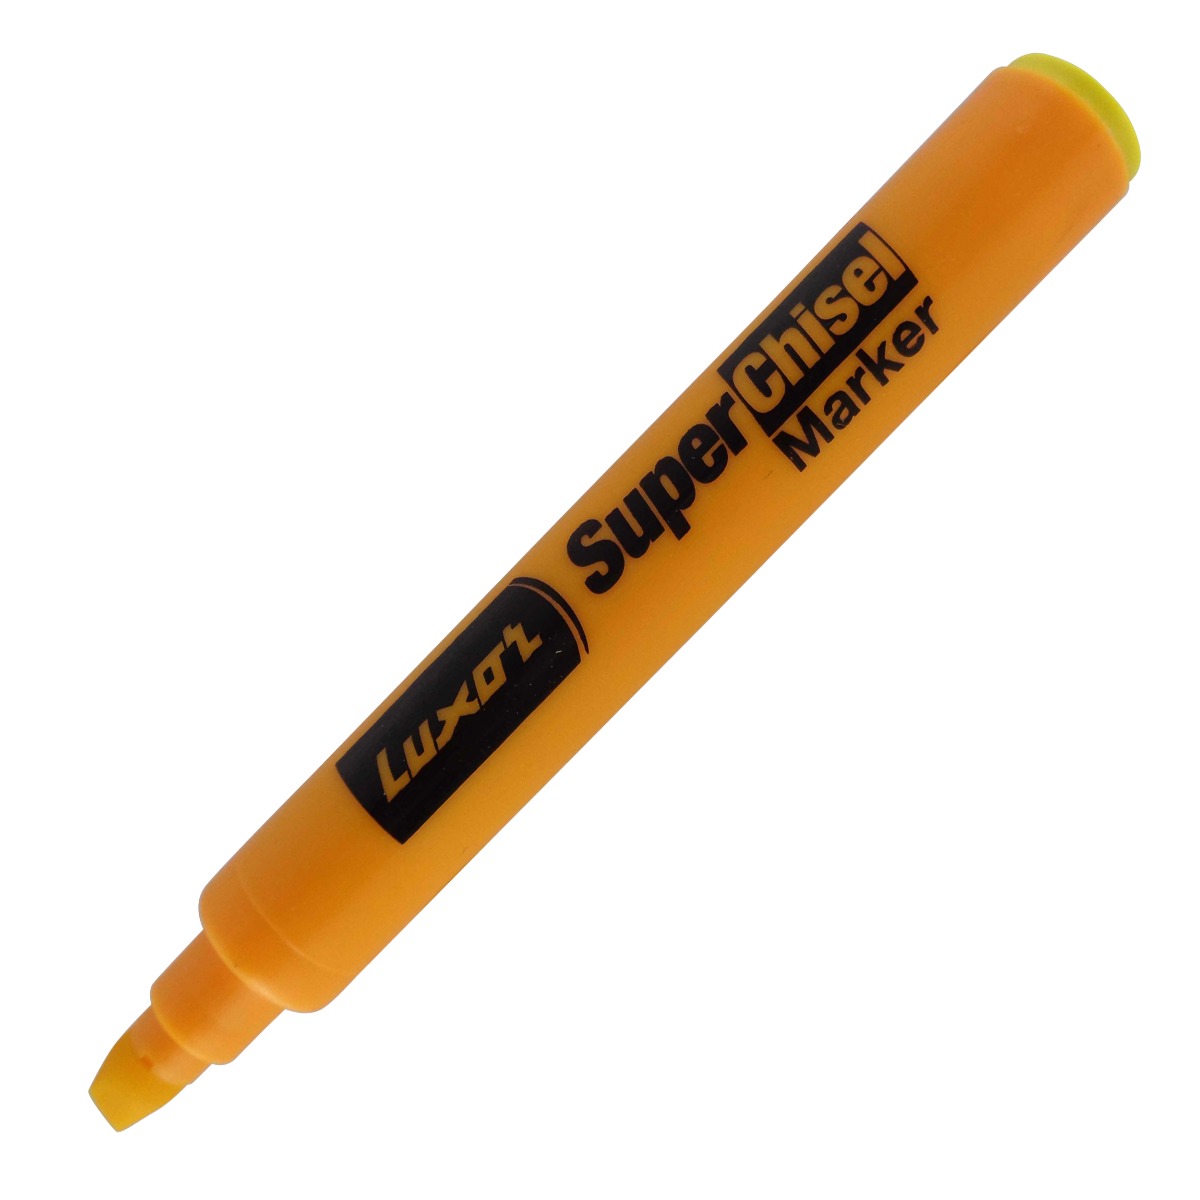 Luxor Model: 15099 Super chisel Yellow color body with Yellow color cap with Yellow ink marker